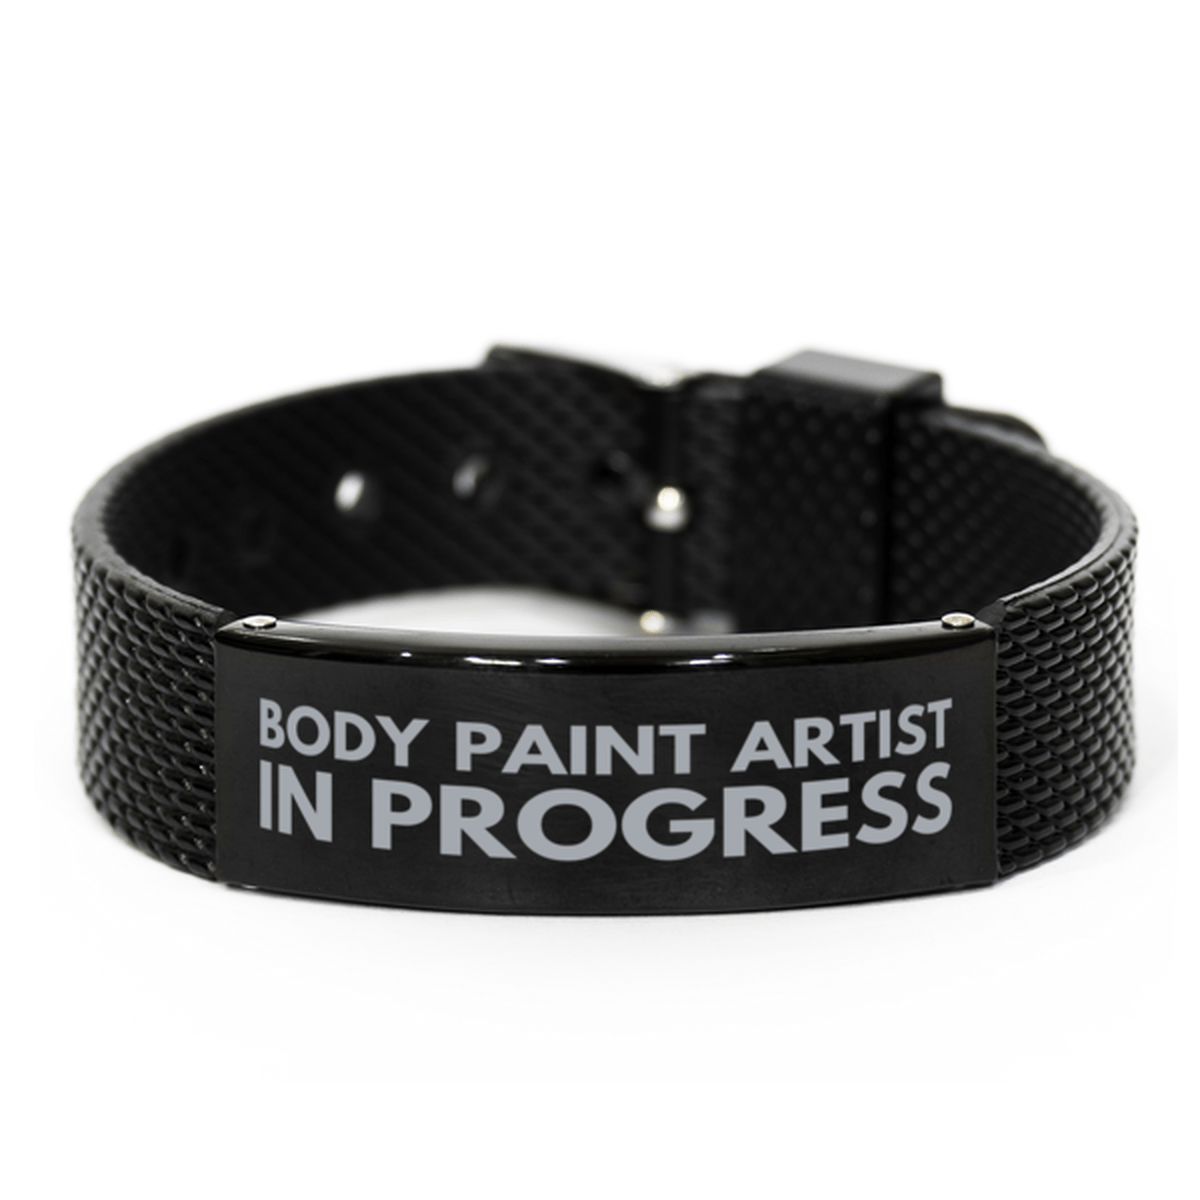 Inspirational Body Paint Artist Black Shark Mesh Bracelet, Body Paint Artist In Progress, Best Graduation Gifts for Students